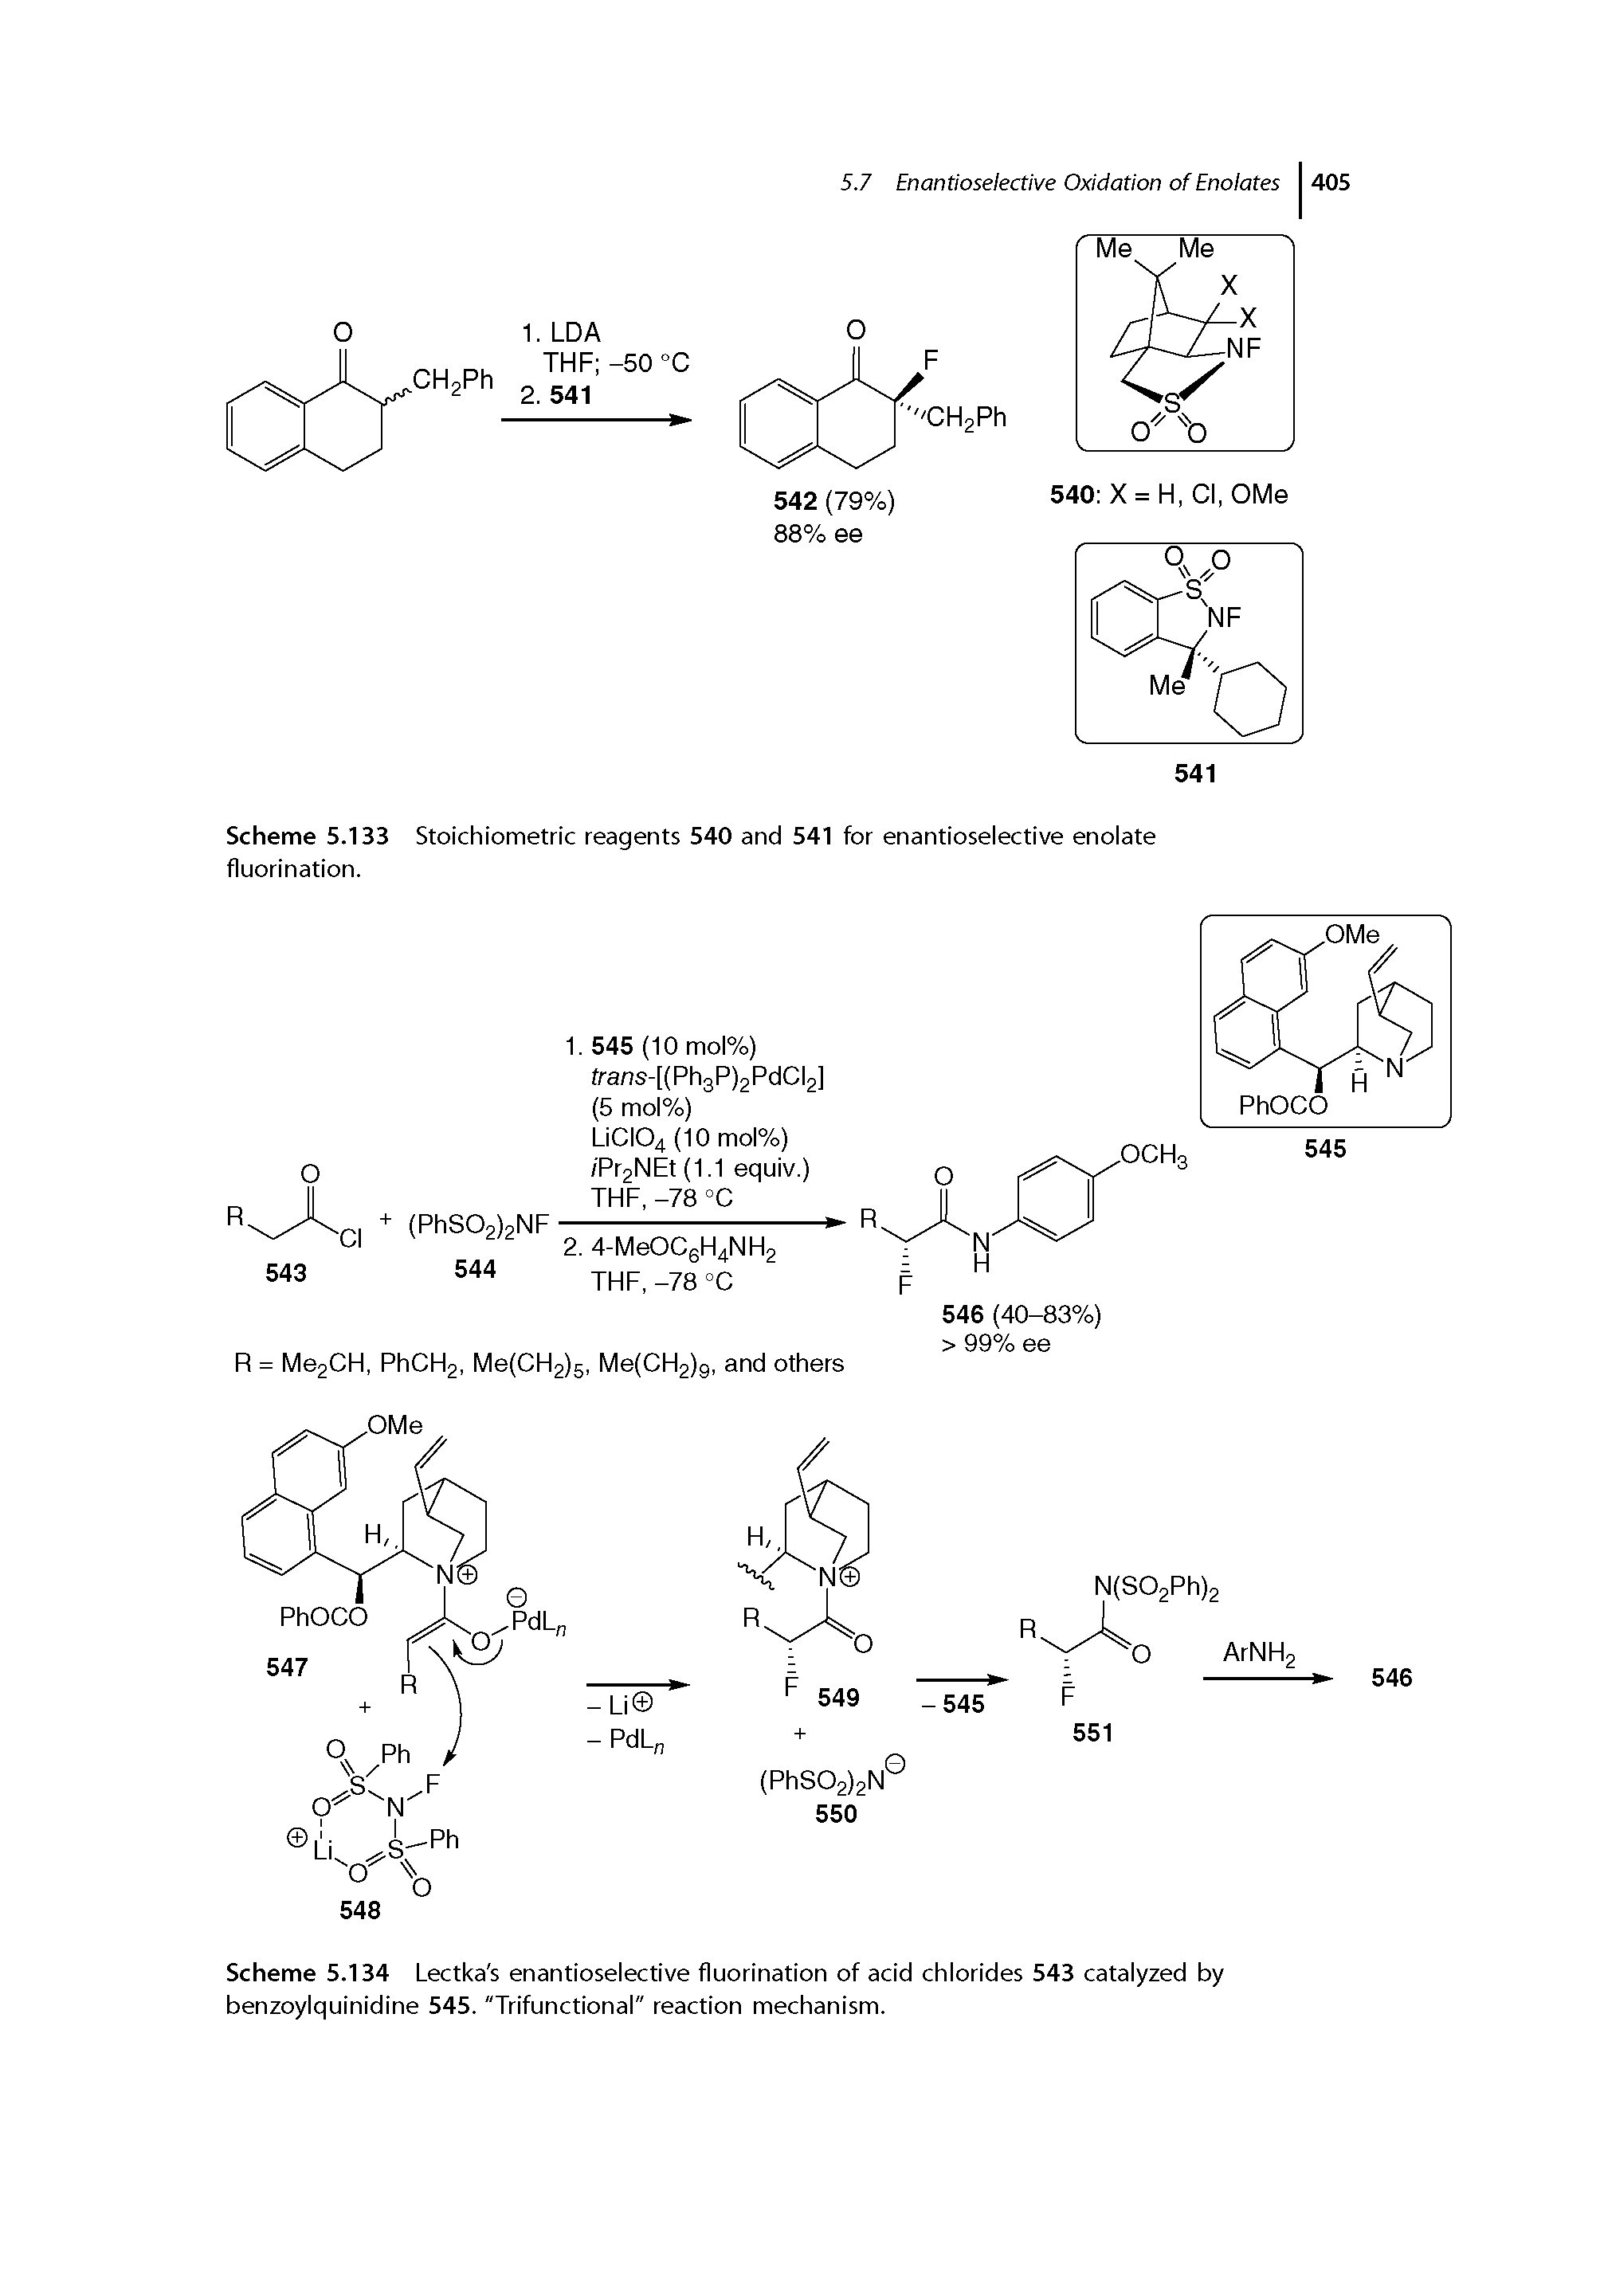 Scheme 5.134 Lectka s enantioselective fluorination of acid chlorides 543 catalyzed by benzoylquinidine 545. "Trifunctional" reaction mechanism.